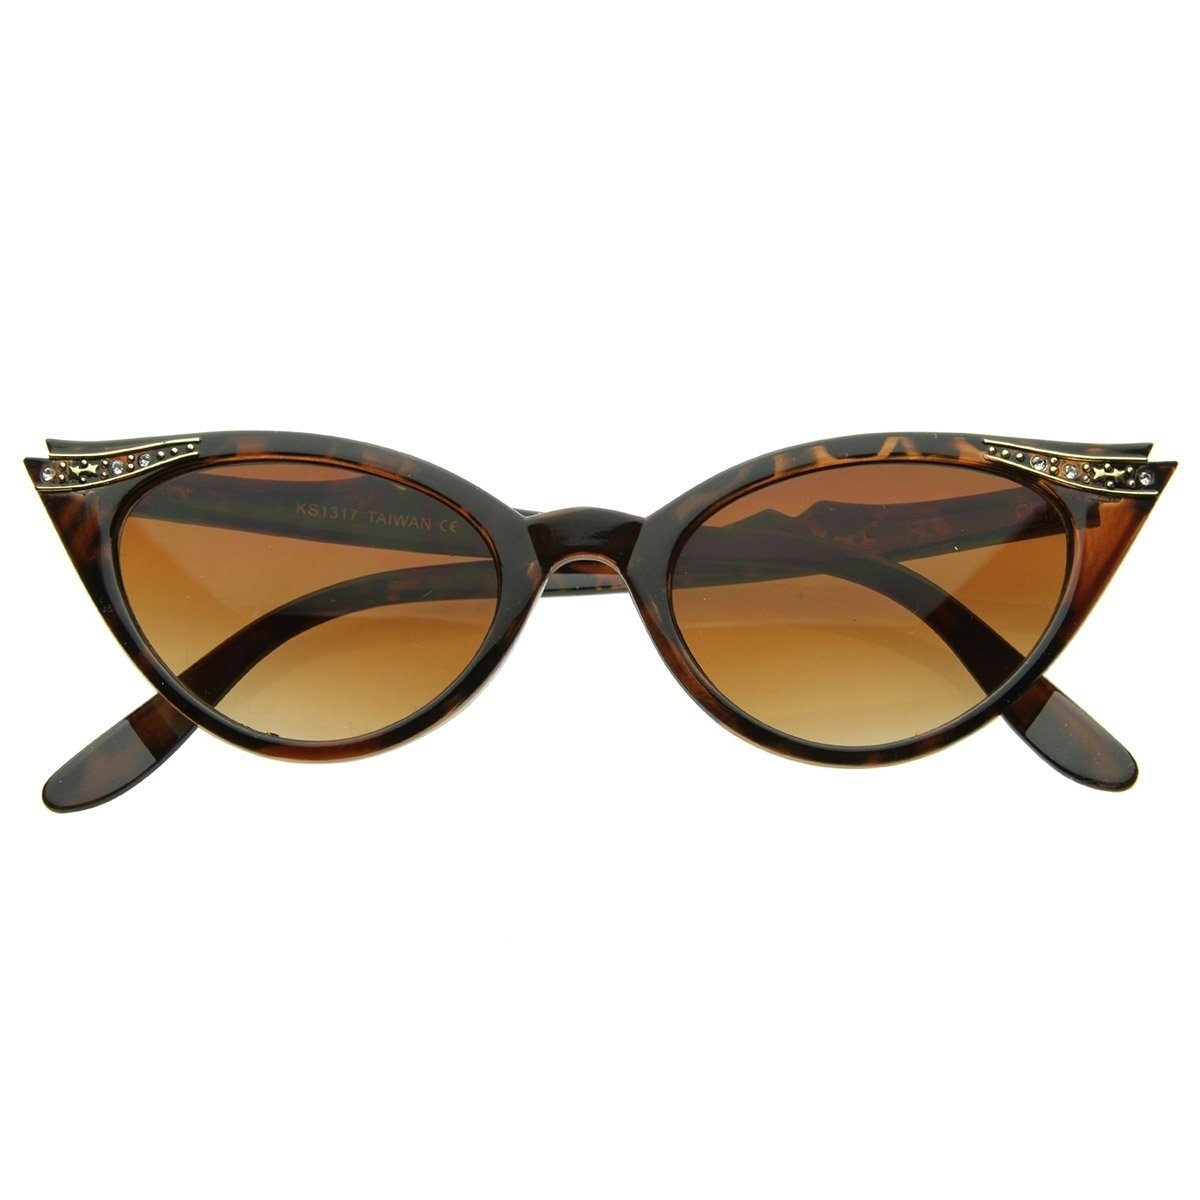 Vintage Inspired Mod Womens Fashion Rhinestone Cat Eye Sunglasses - Brown-Fade